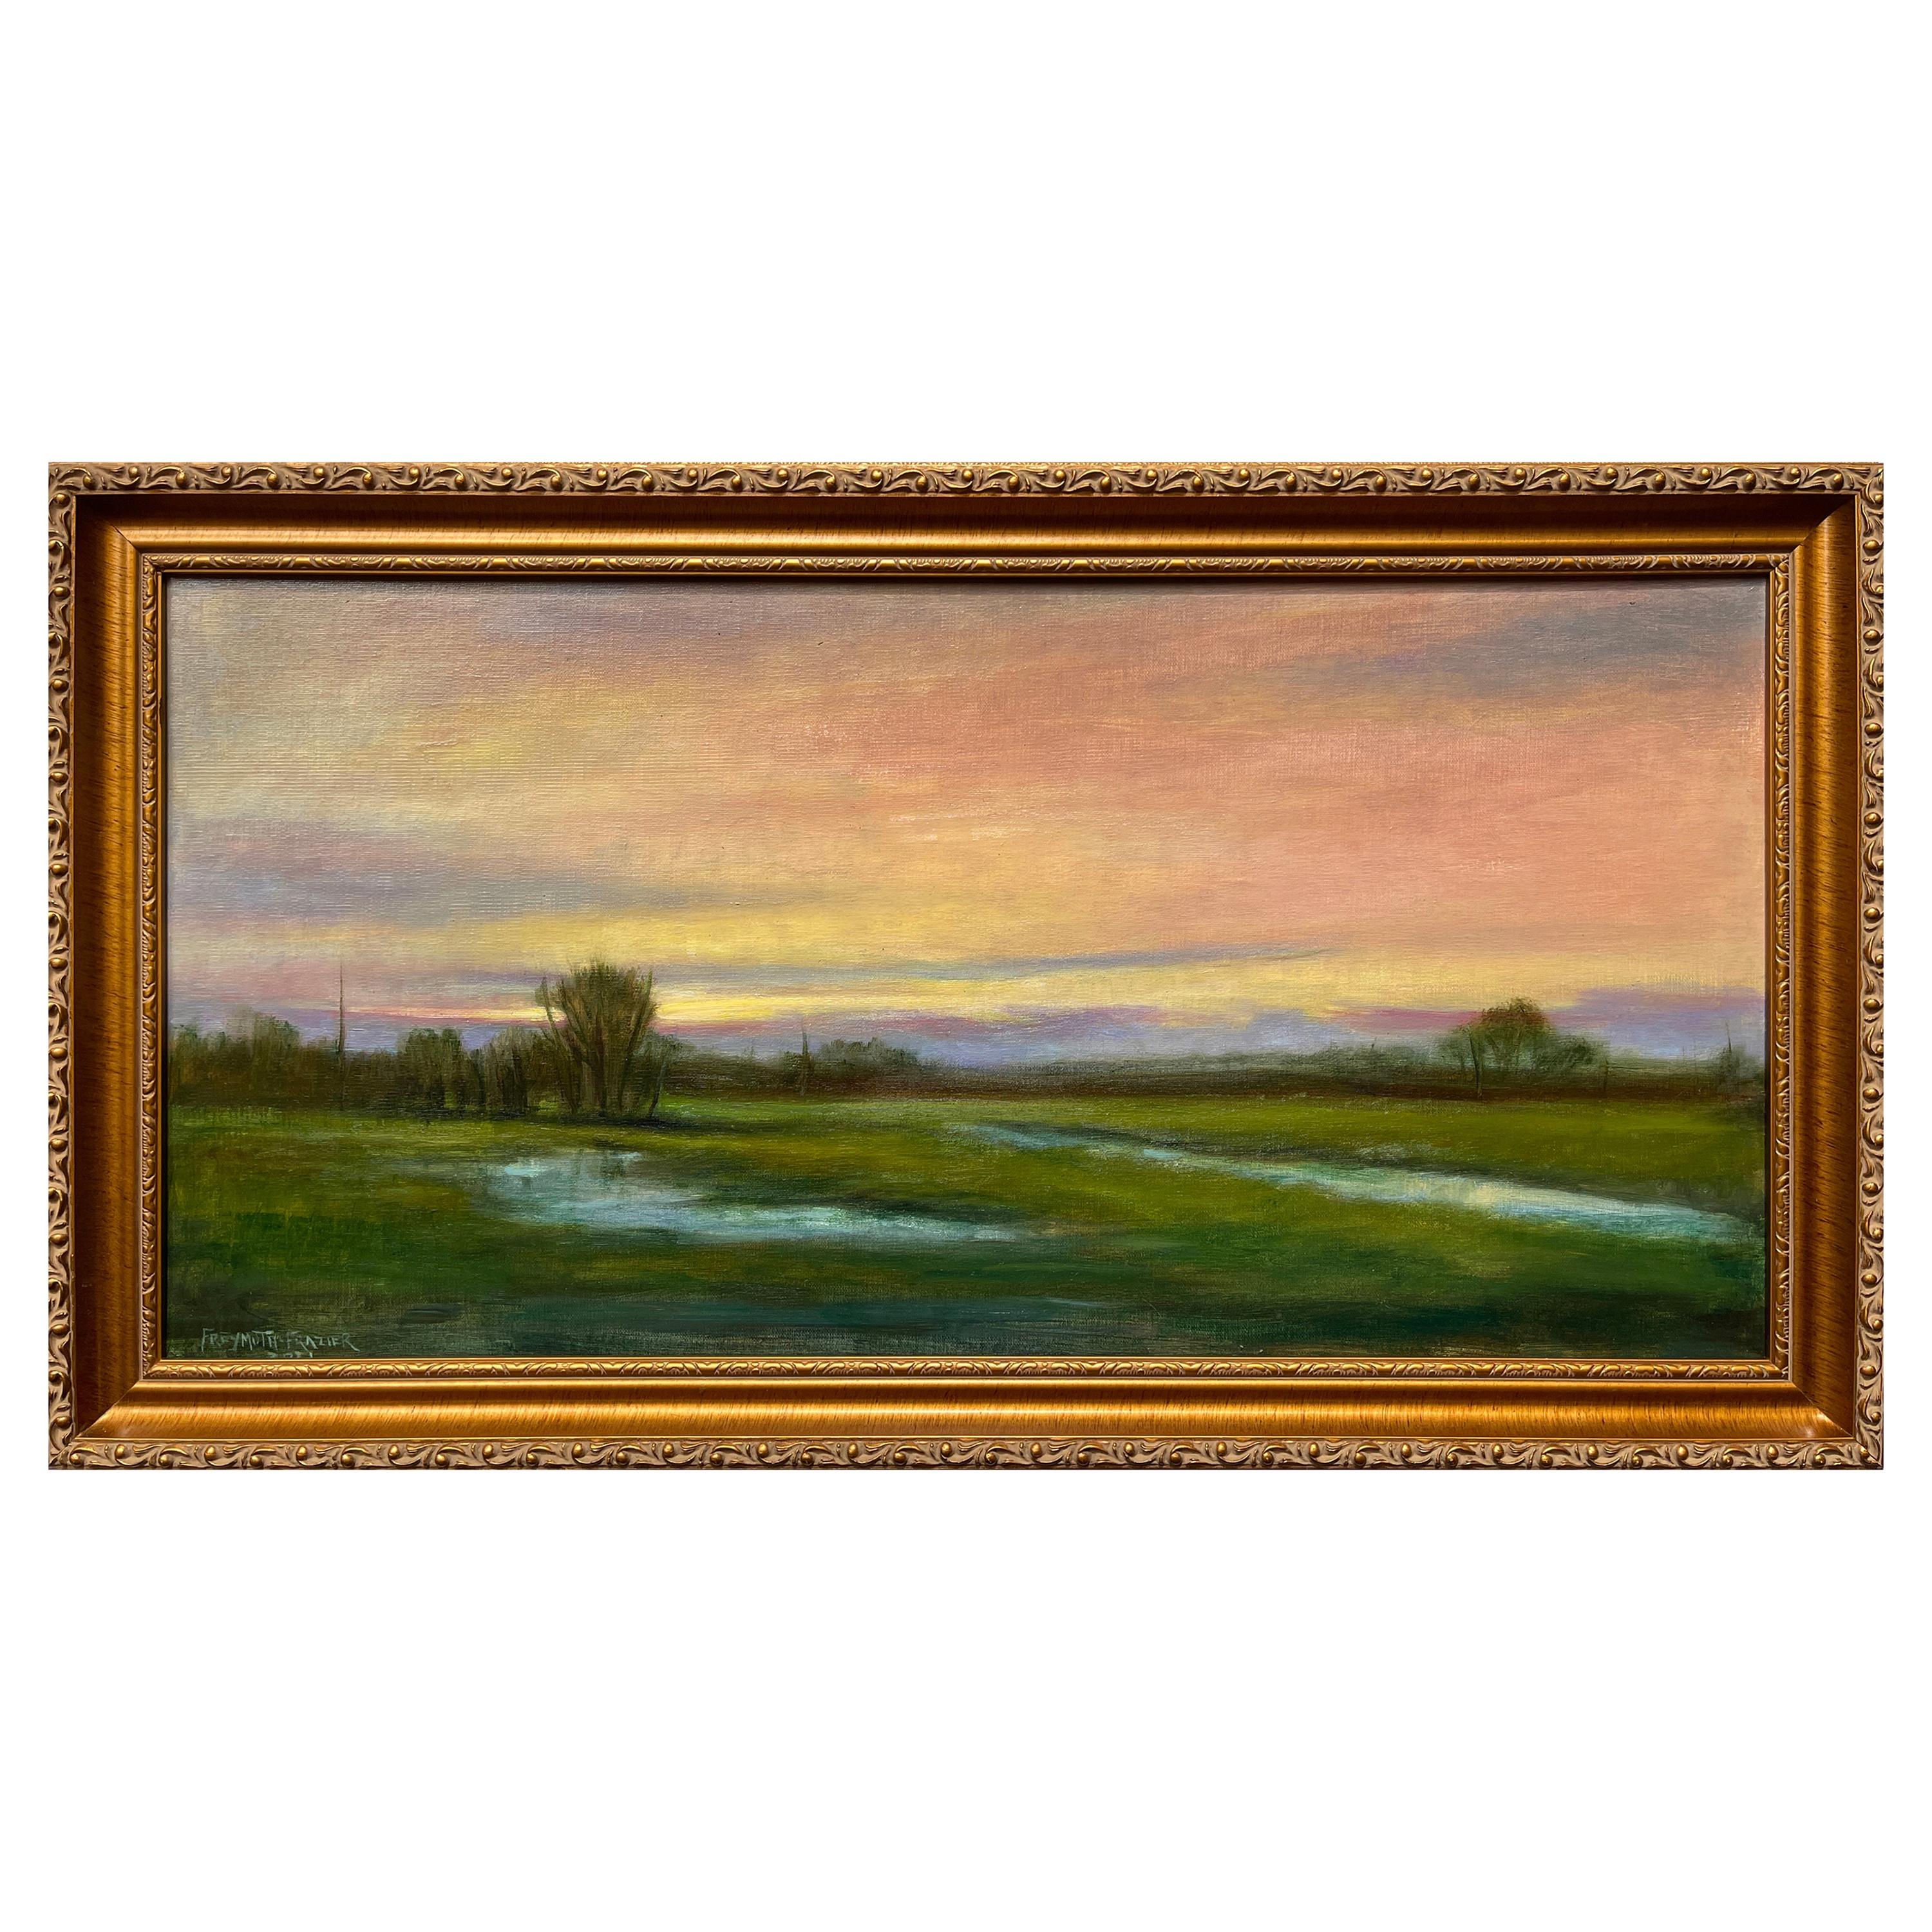 Wetlands, Reflective Marsh on a Spring Sky, Soft Romantic Colors, Original Oil